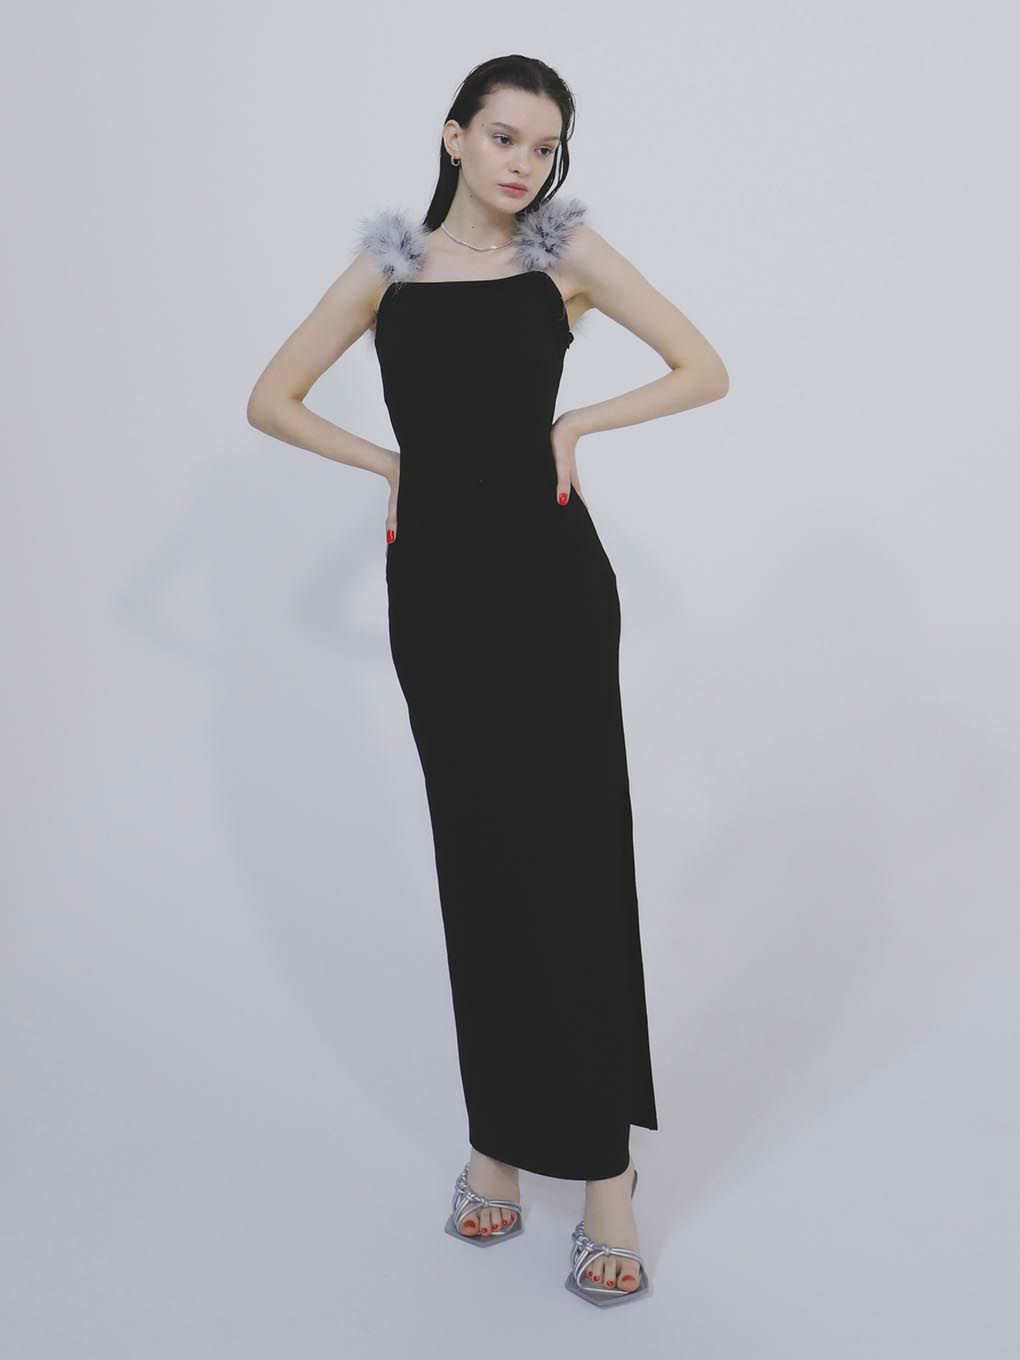 melt the lady chaton long dress | tradexautomotive.com